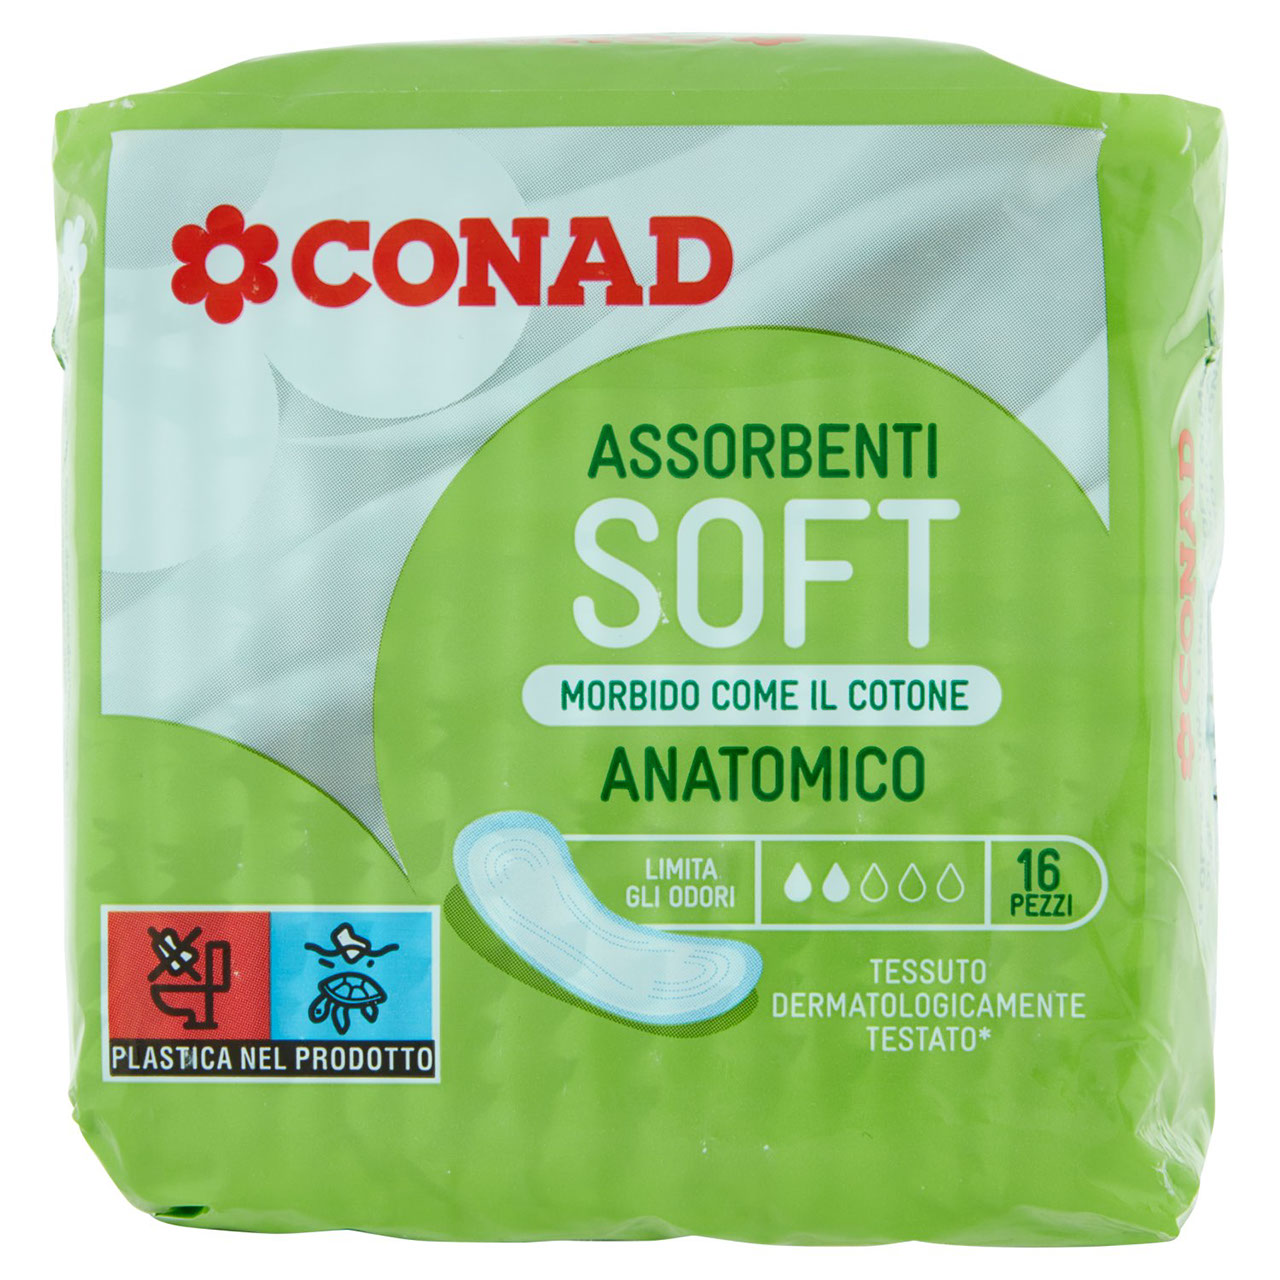 Assorbenti Soft Anatomici 16pz Conad online